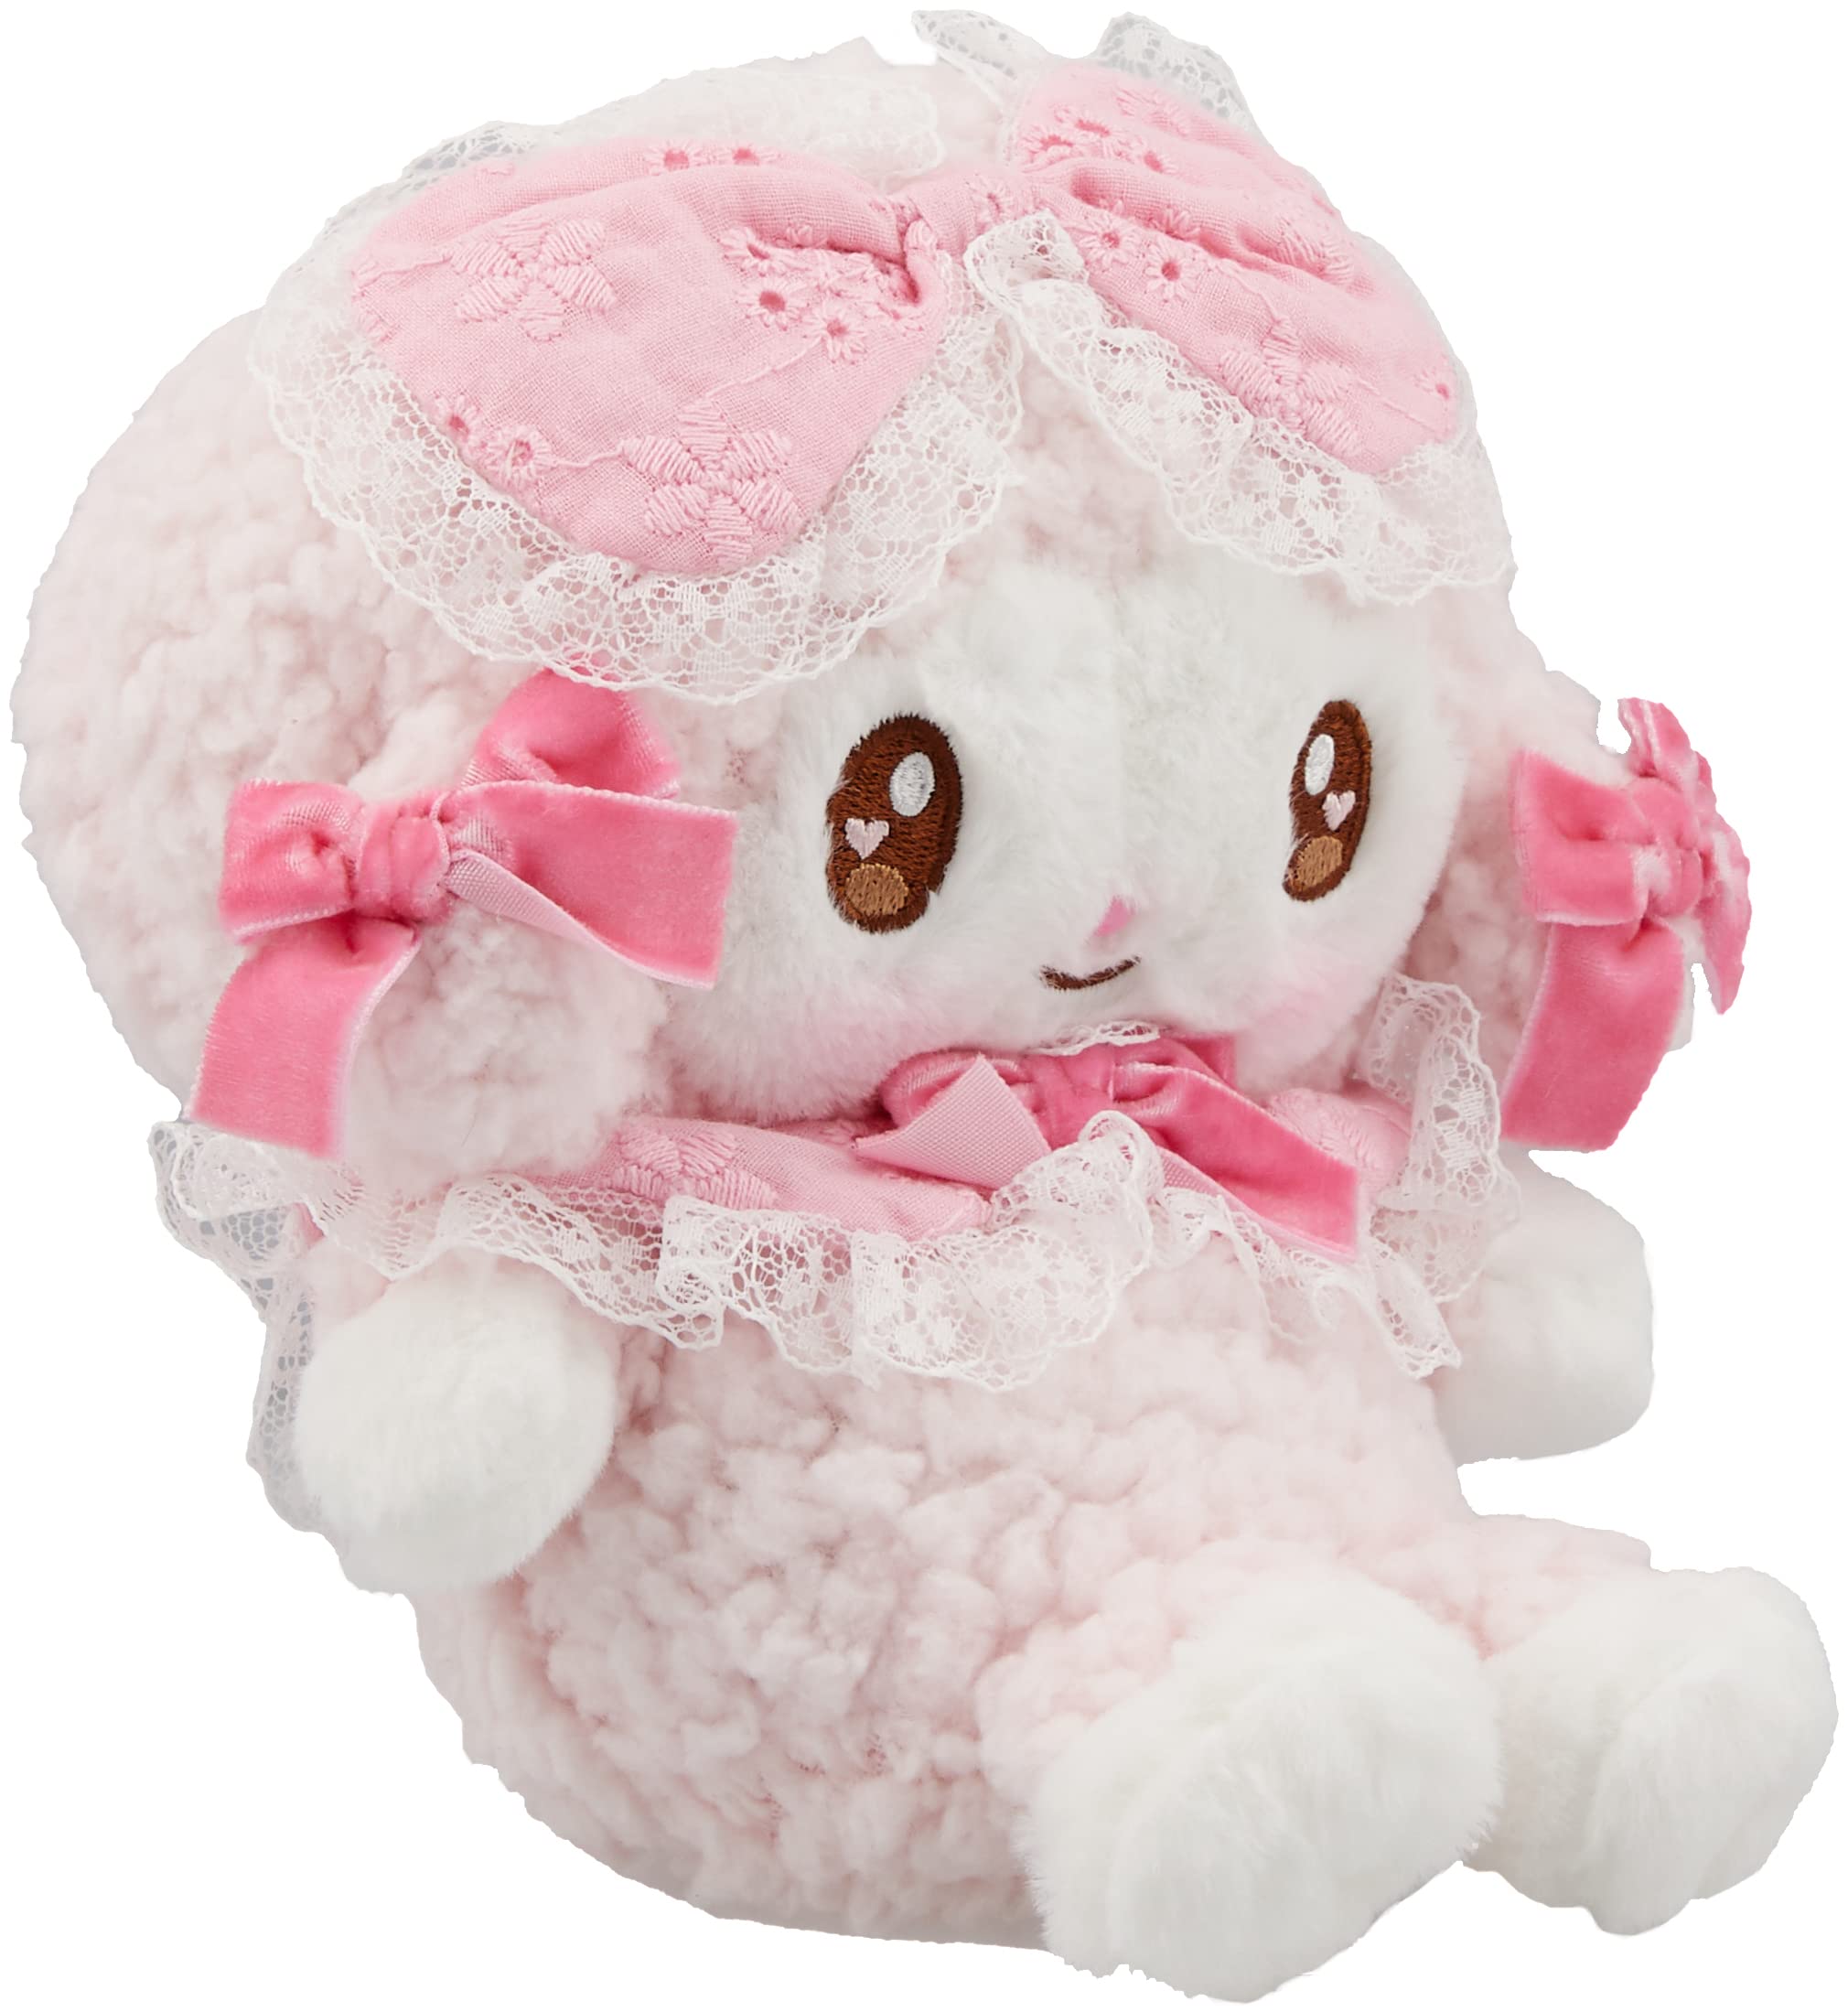 Sanrio Sweet Lolita Piano Plush Doll Small Size Pink ?172129-22 H16xW15xD12cm